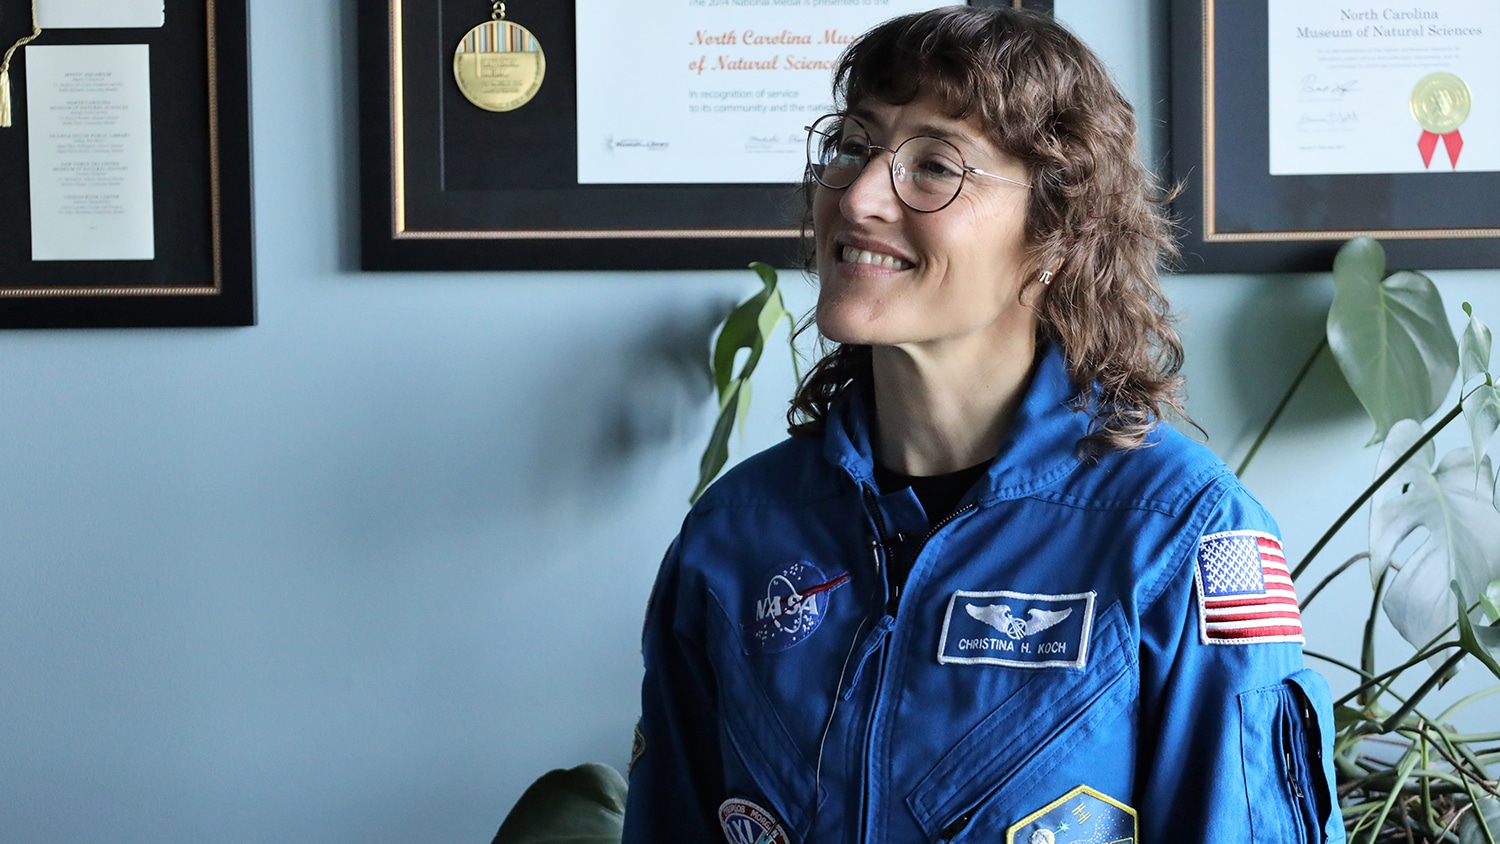 Christina Koch dressed in her blue NASA uniform.